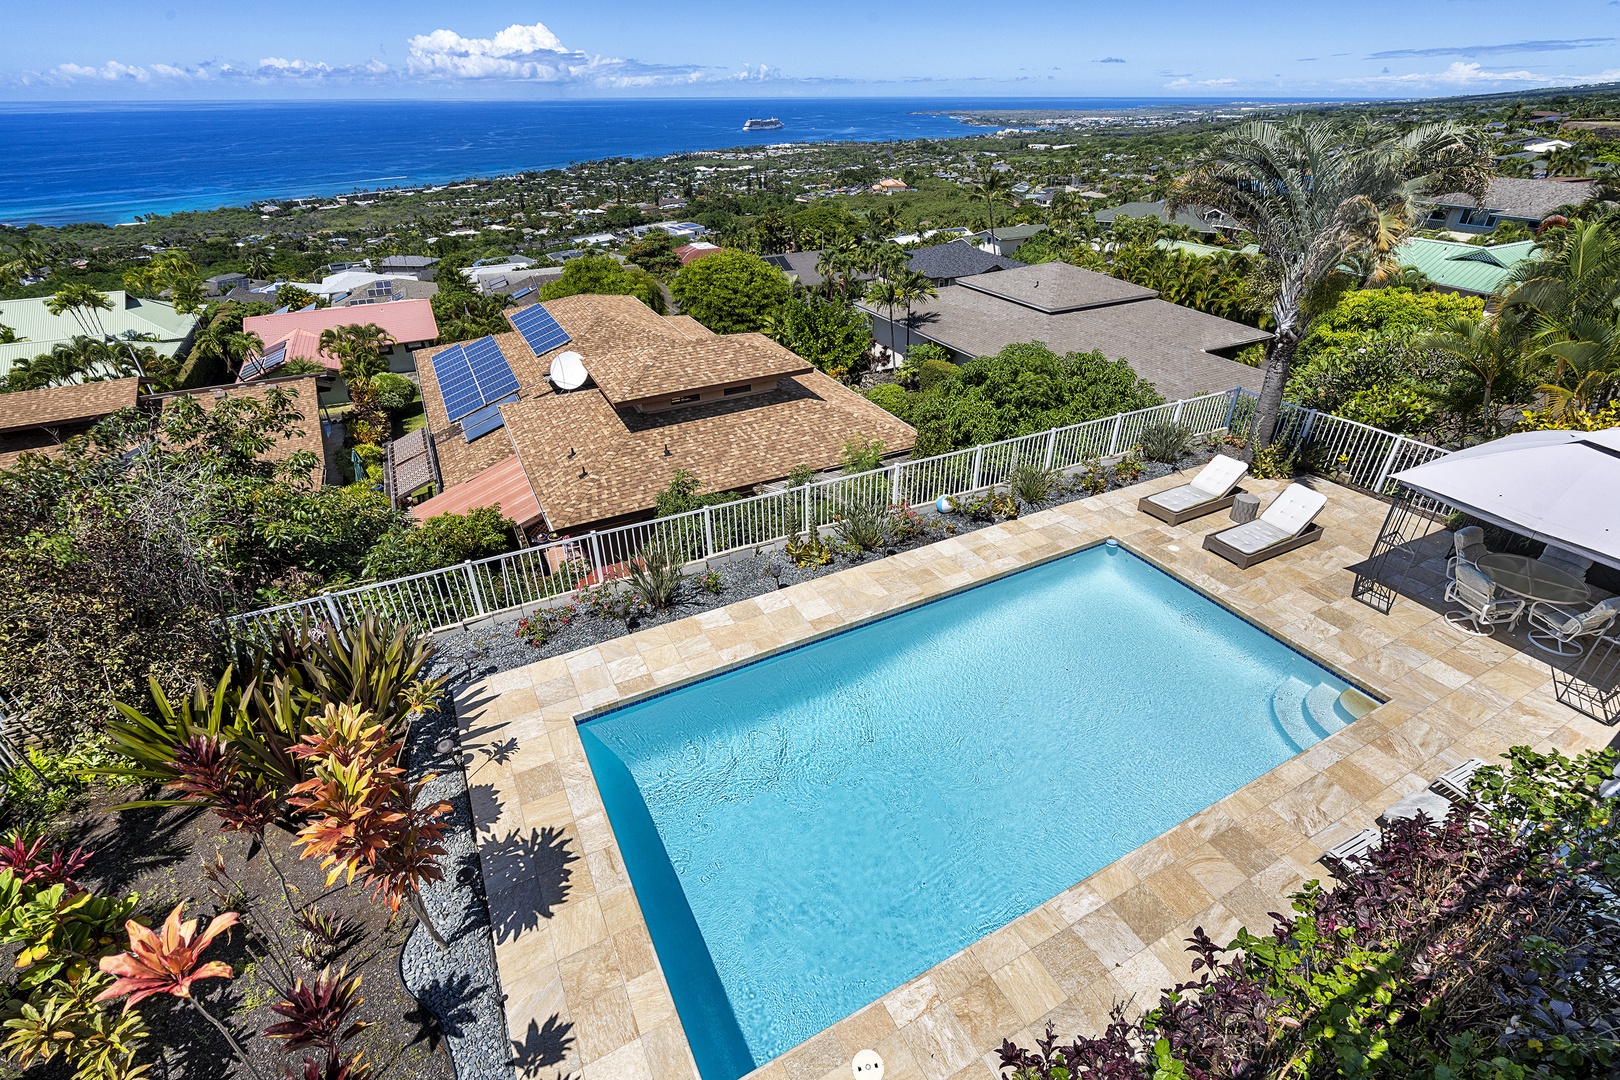 Kailua Kona Vacation Rentals, Ho'o Maluhia - Overlooking the pool from the upstairs Lanai!